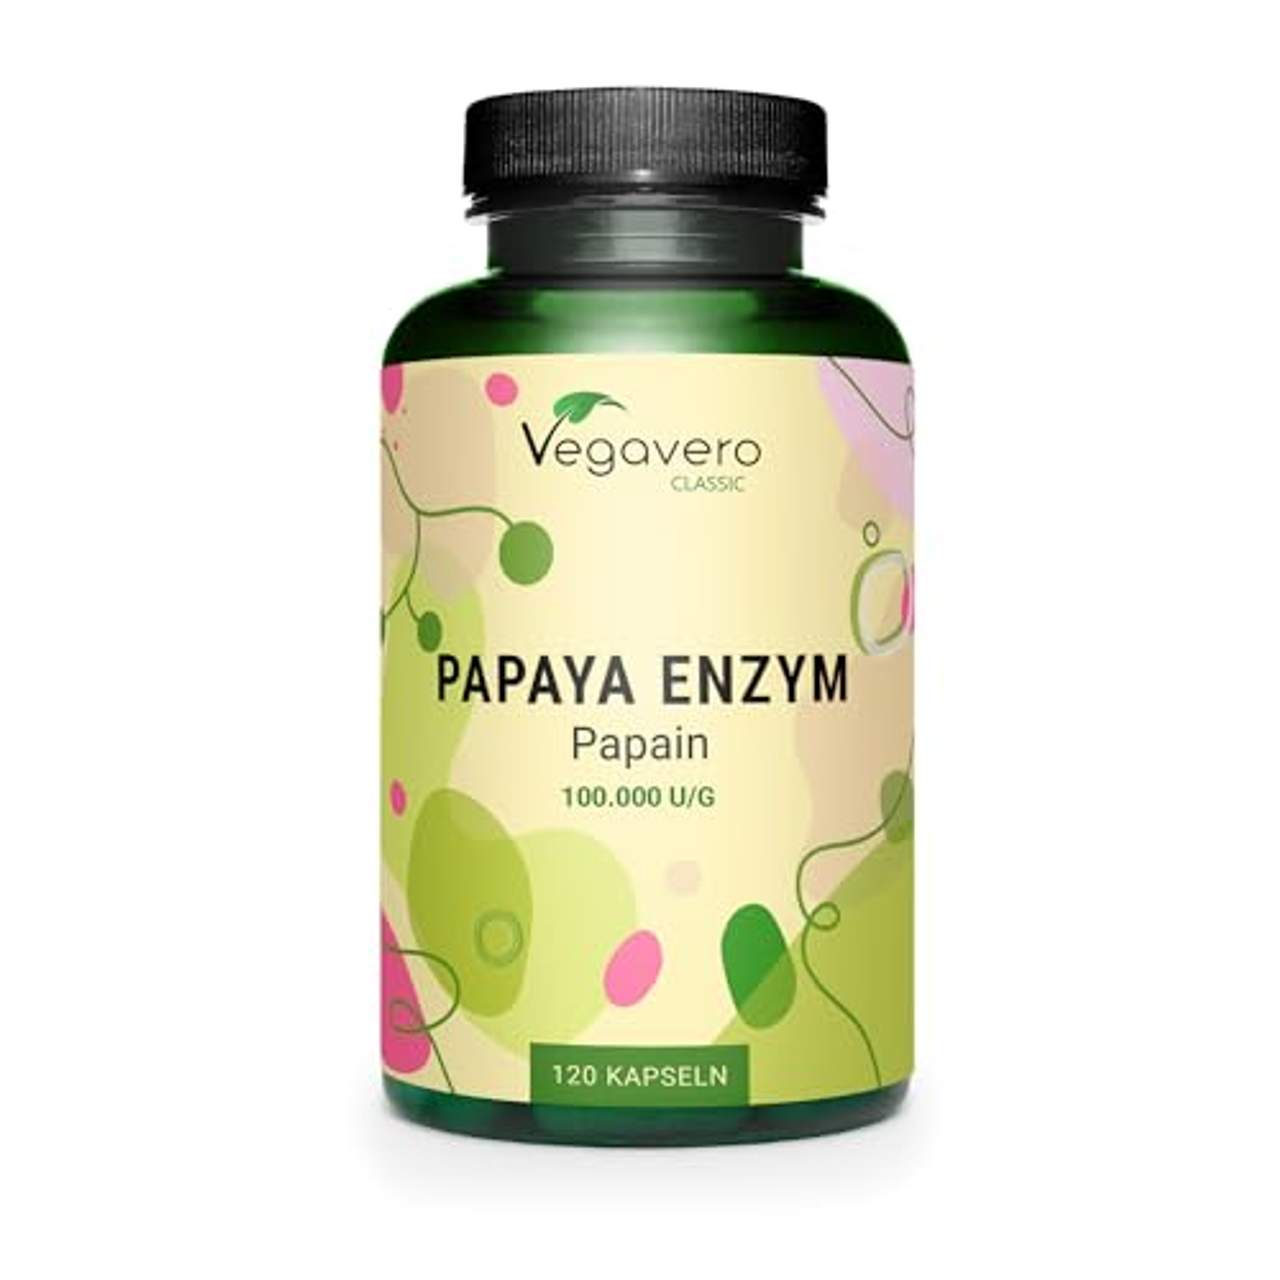 Papaya Enzym Vegavero HOCHDOSIERT: 1500 mg Papain pro Tagesdosis